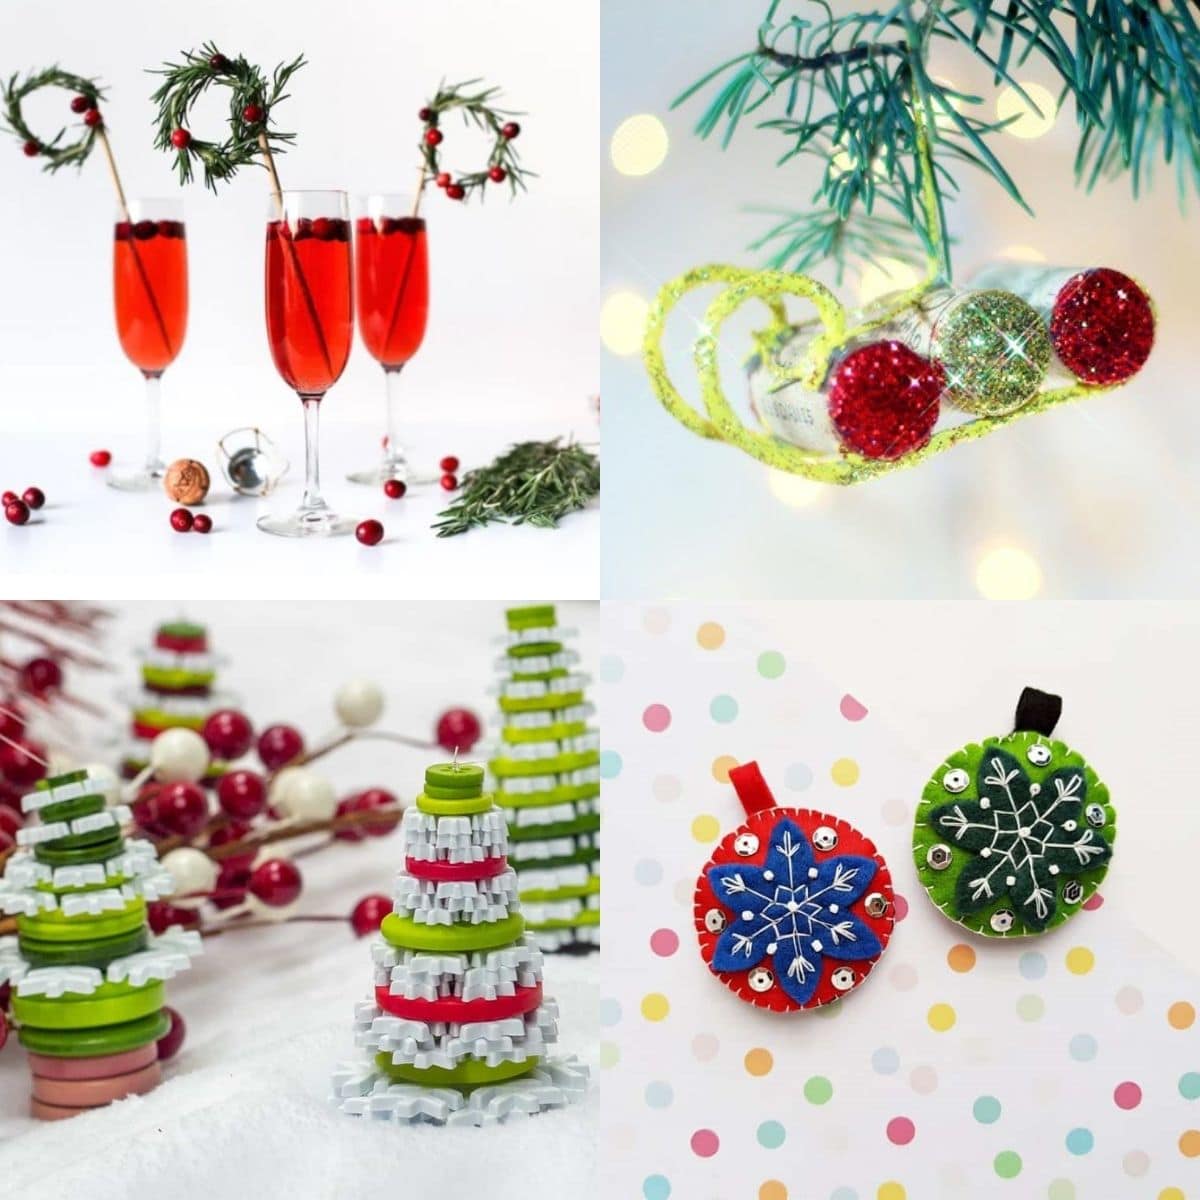 Great Christmas Crafts for Seniors - Home Help for Seniors, Senior